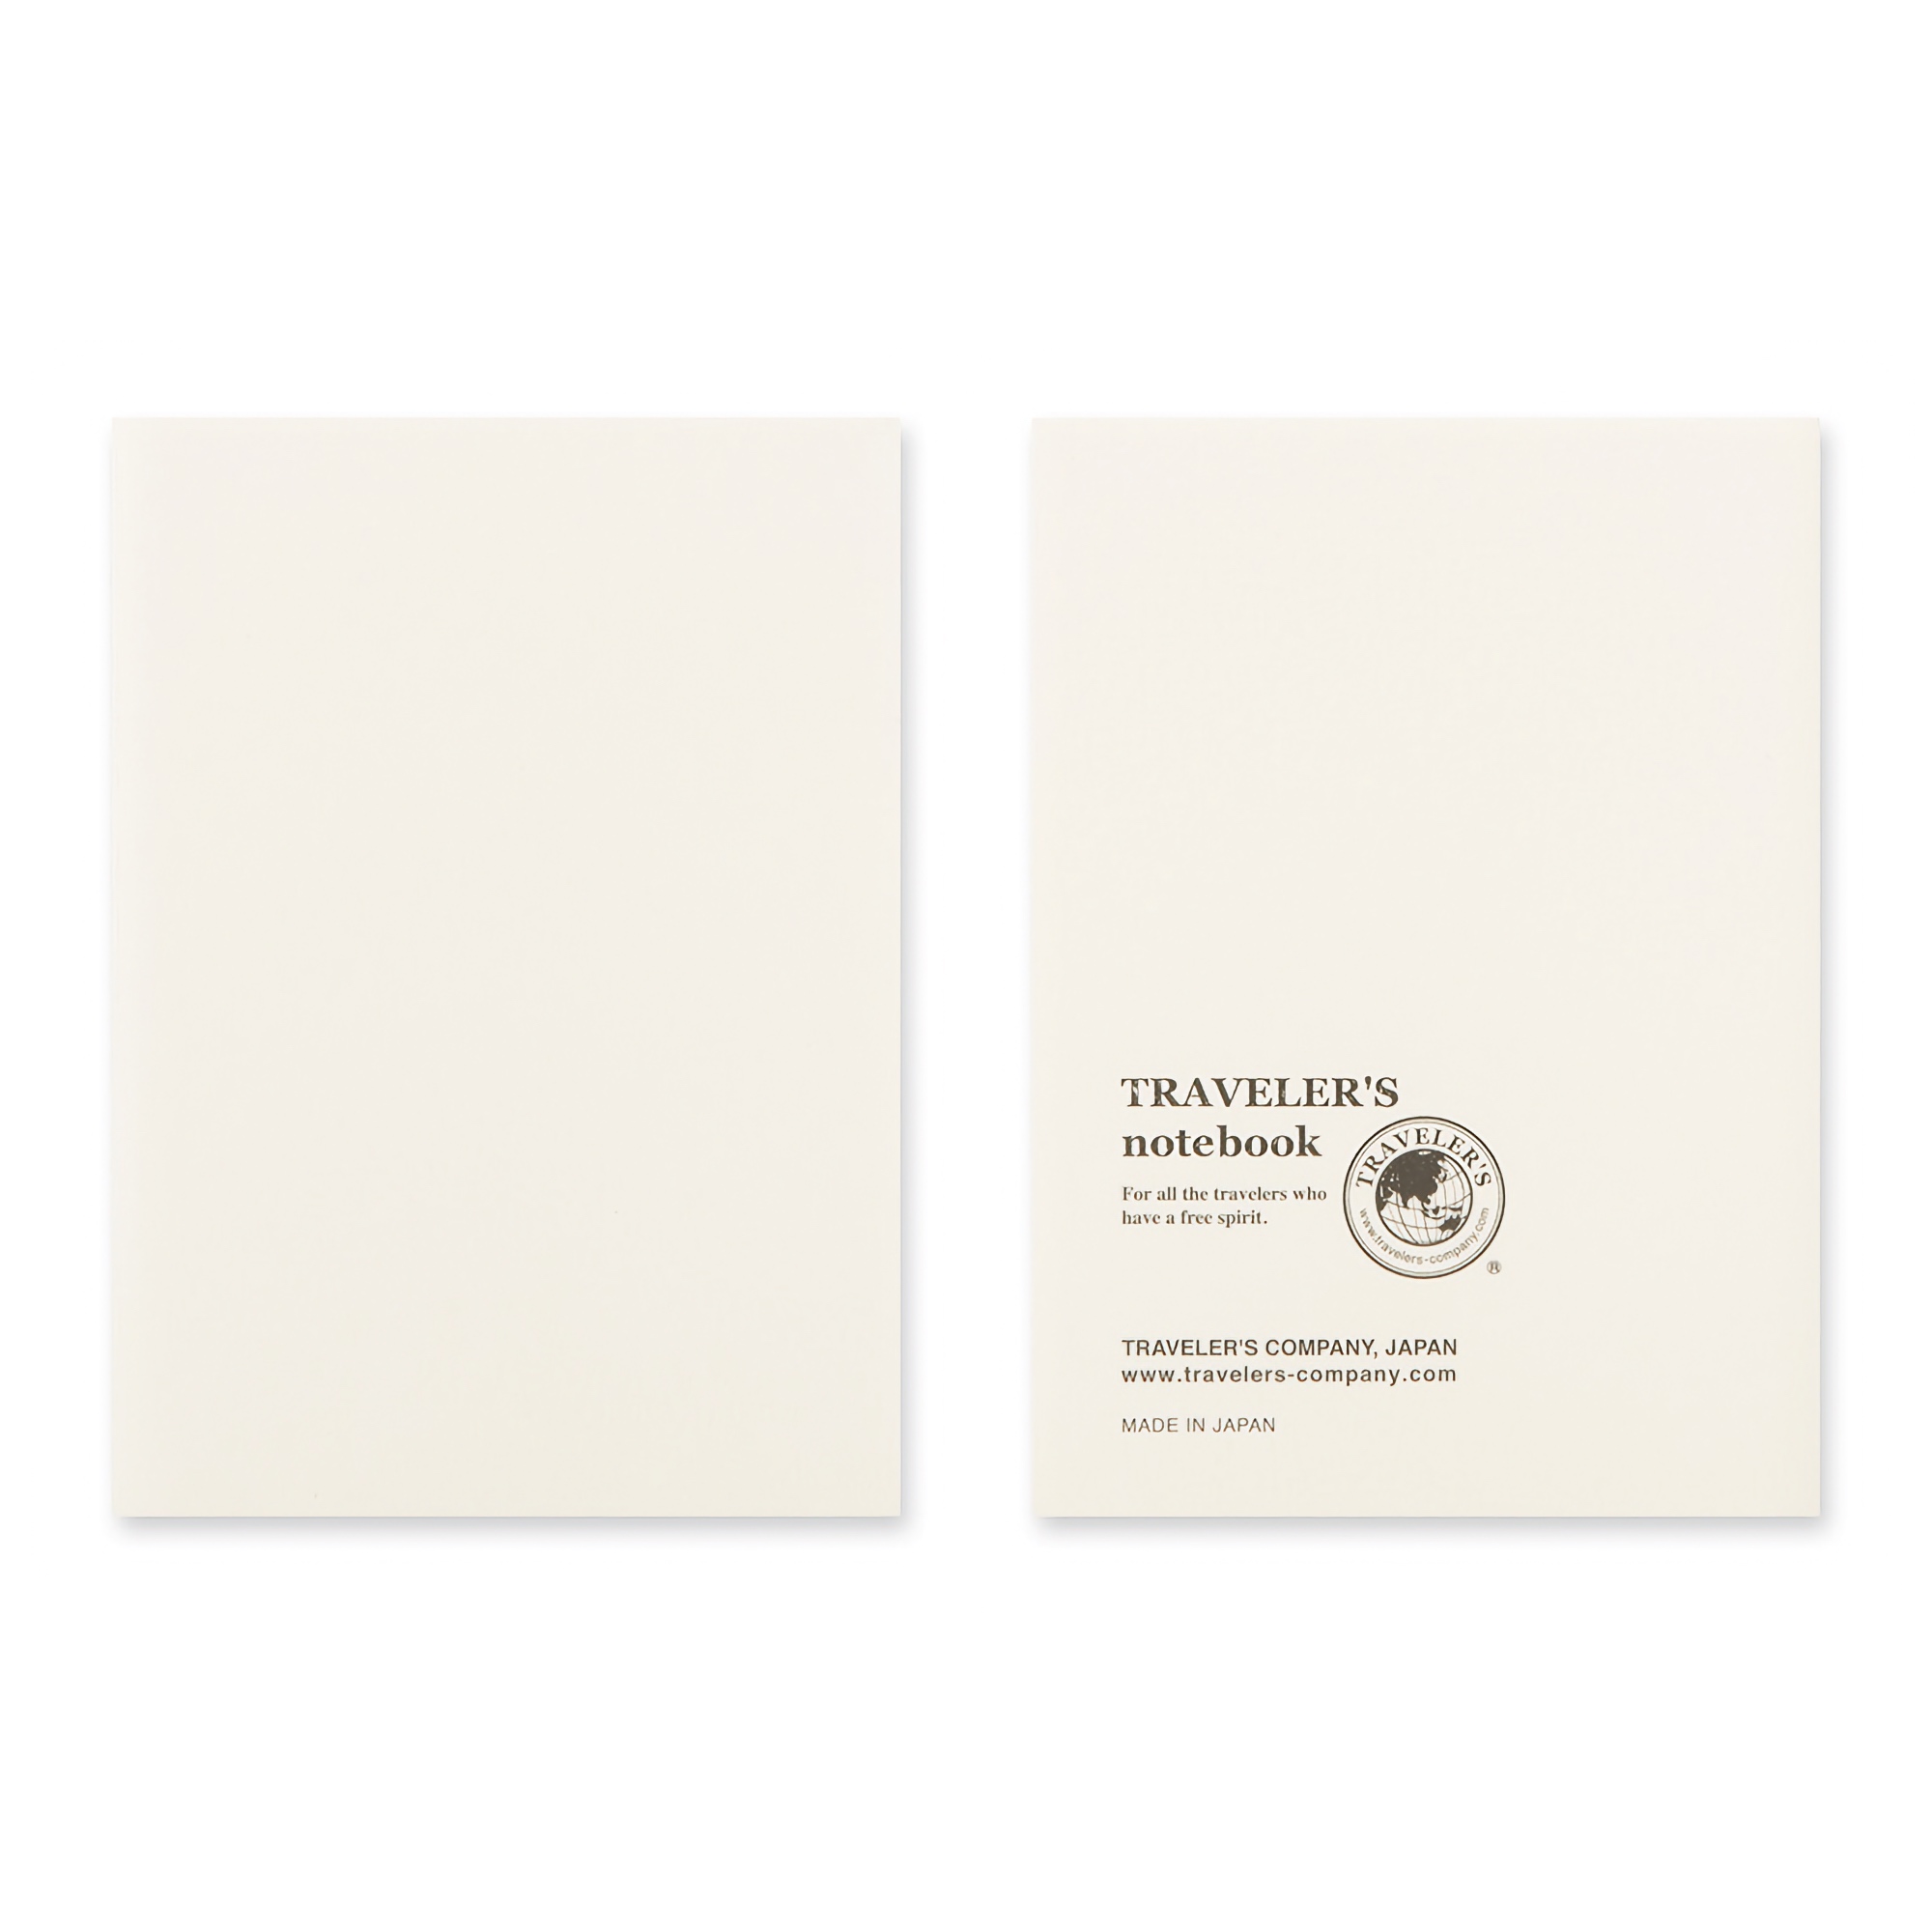 Traveler’s Company Traveler's notebook - 018 Accordion Fold Paper, Passport Size